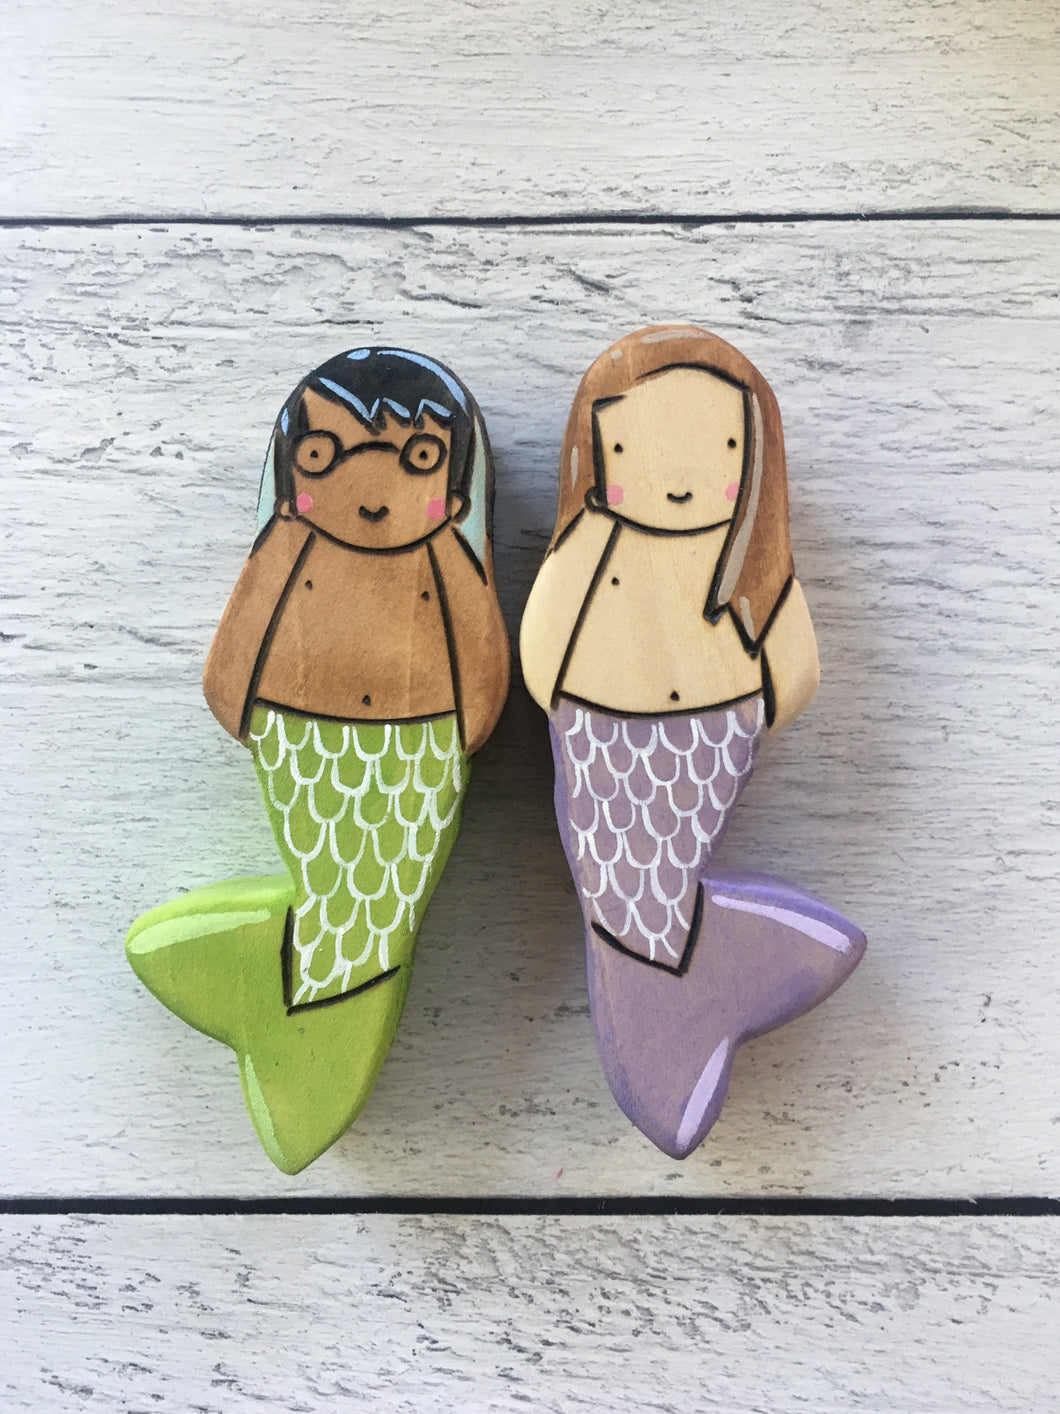 Hama & Halcyon the mermaids